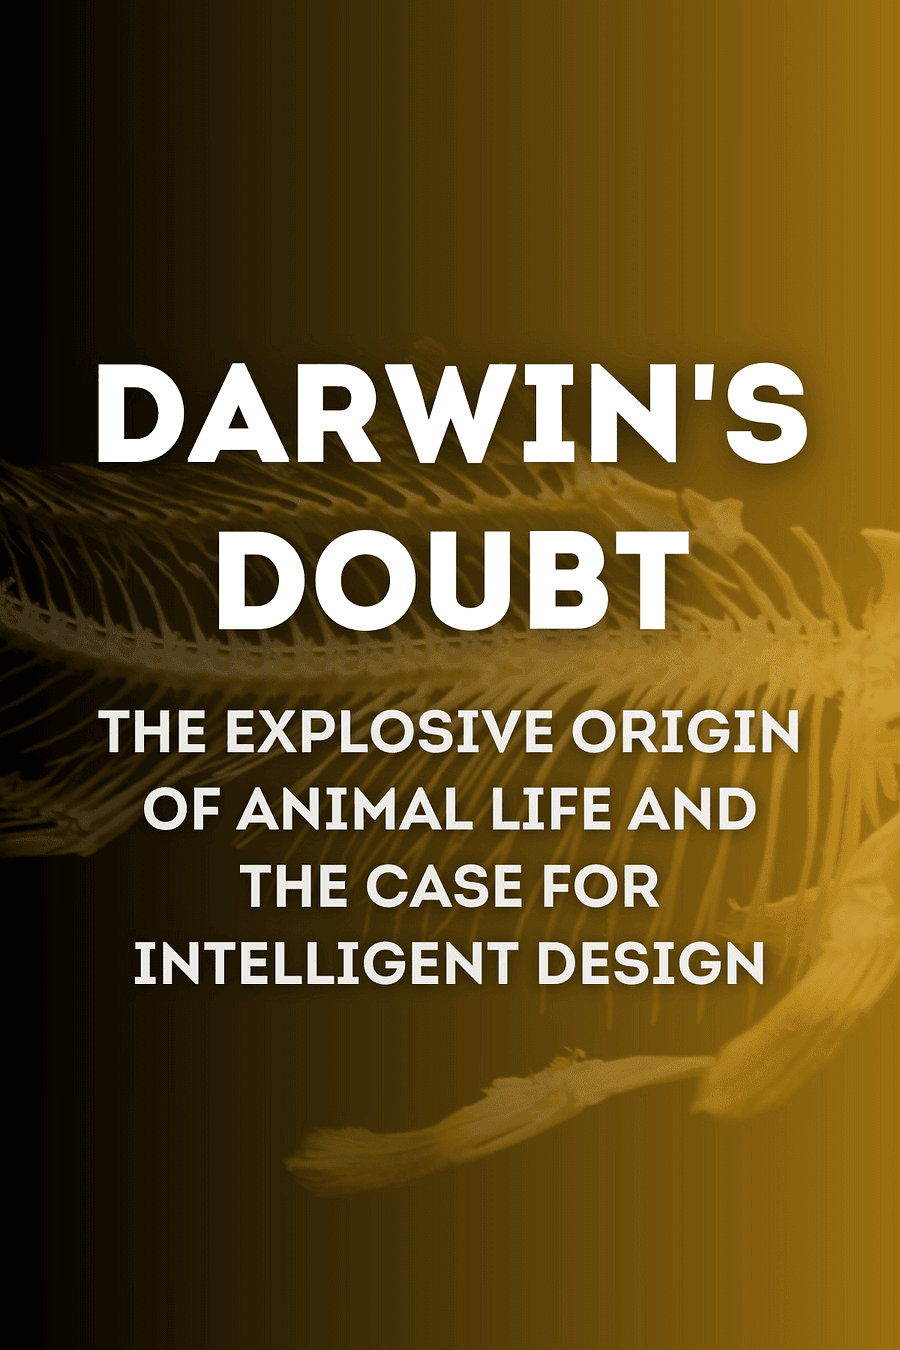 Darwin's Doubt by Stephen C. Meyer - Book Summary